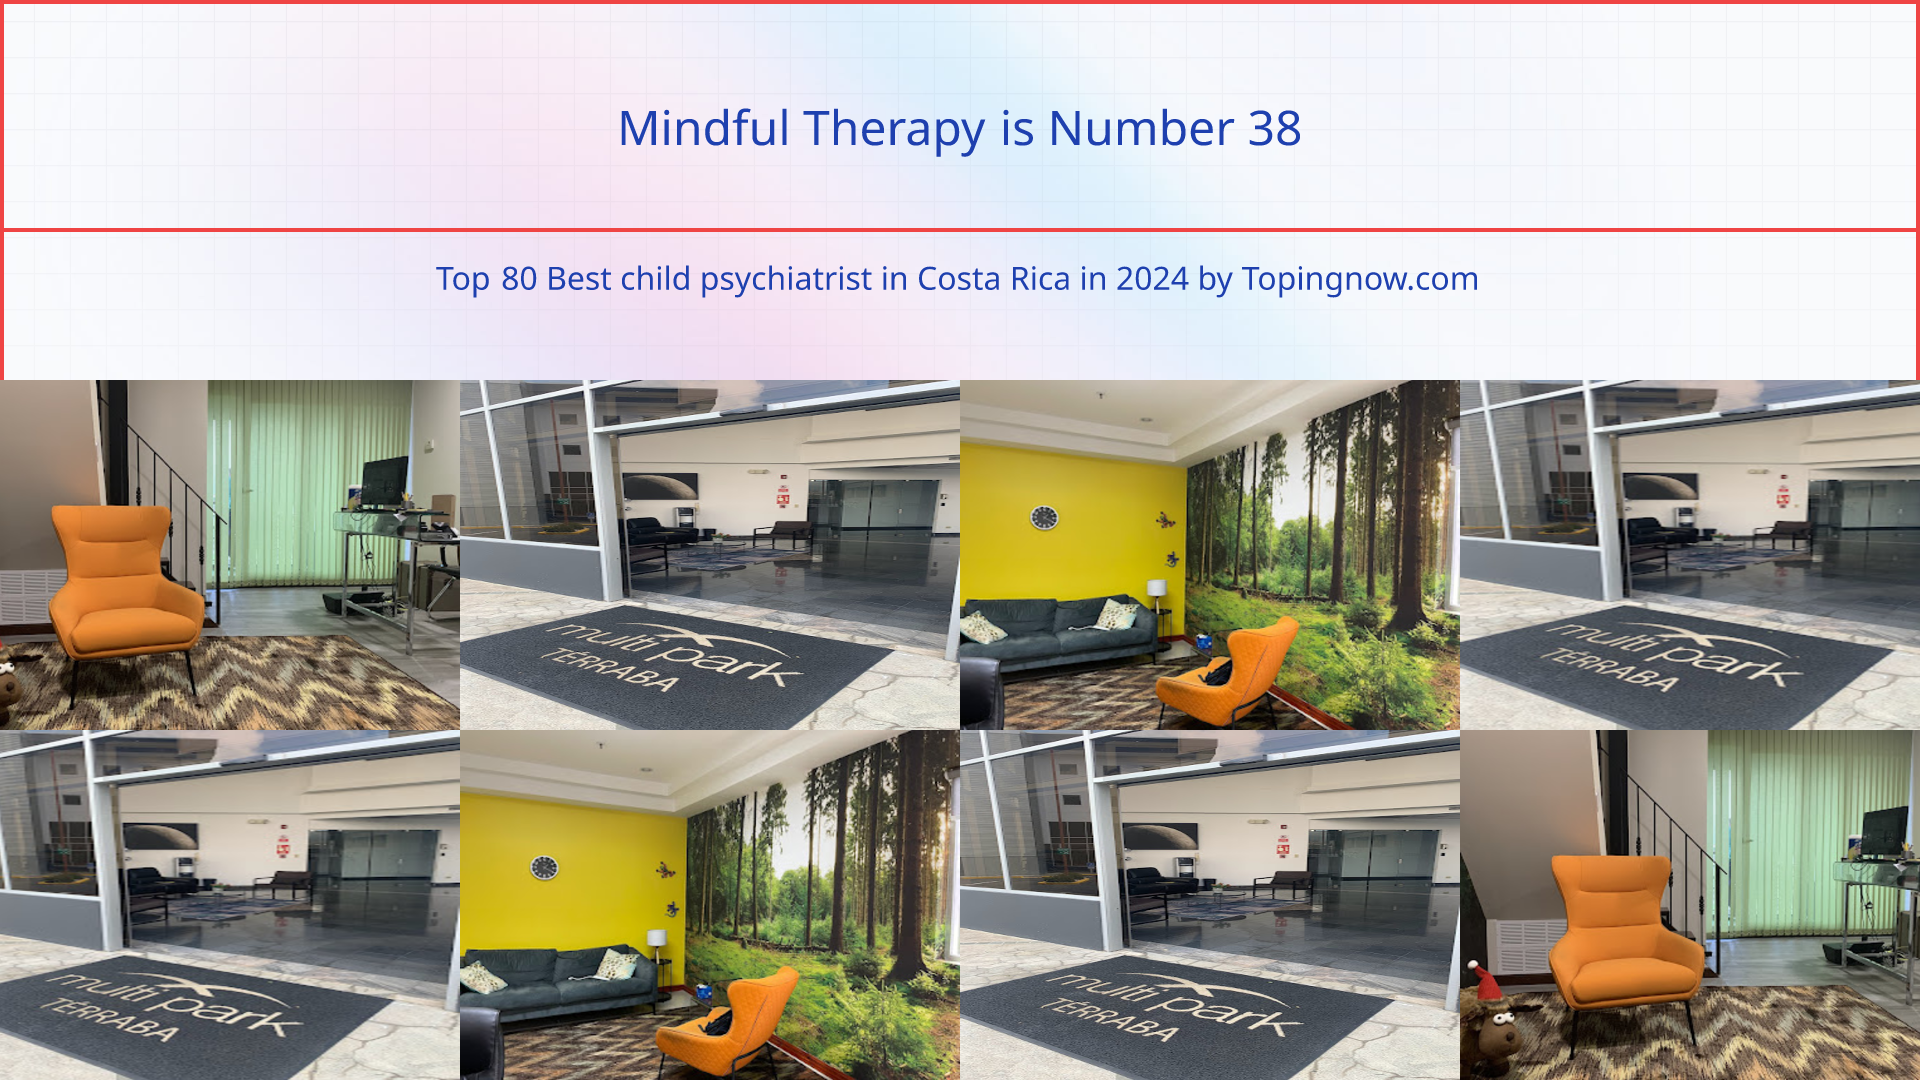 Mindful Therapy: Top 80 Best child psychiatrist in Costa Rica in 2024